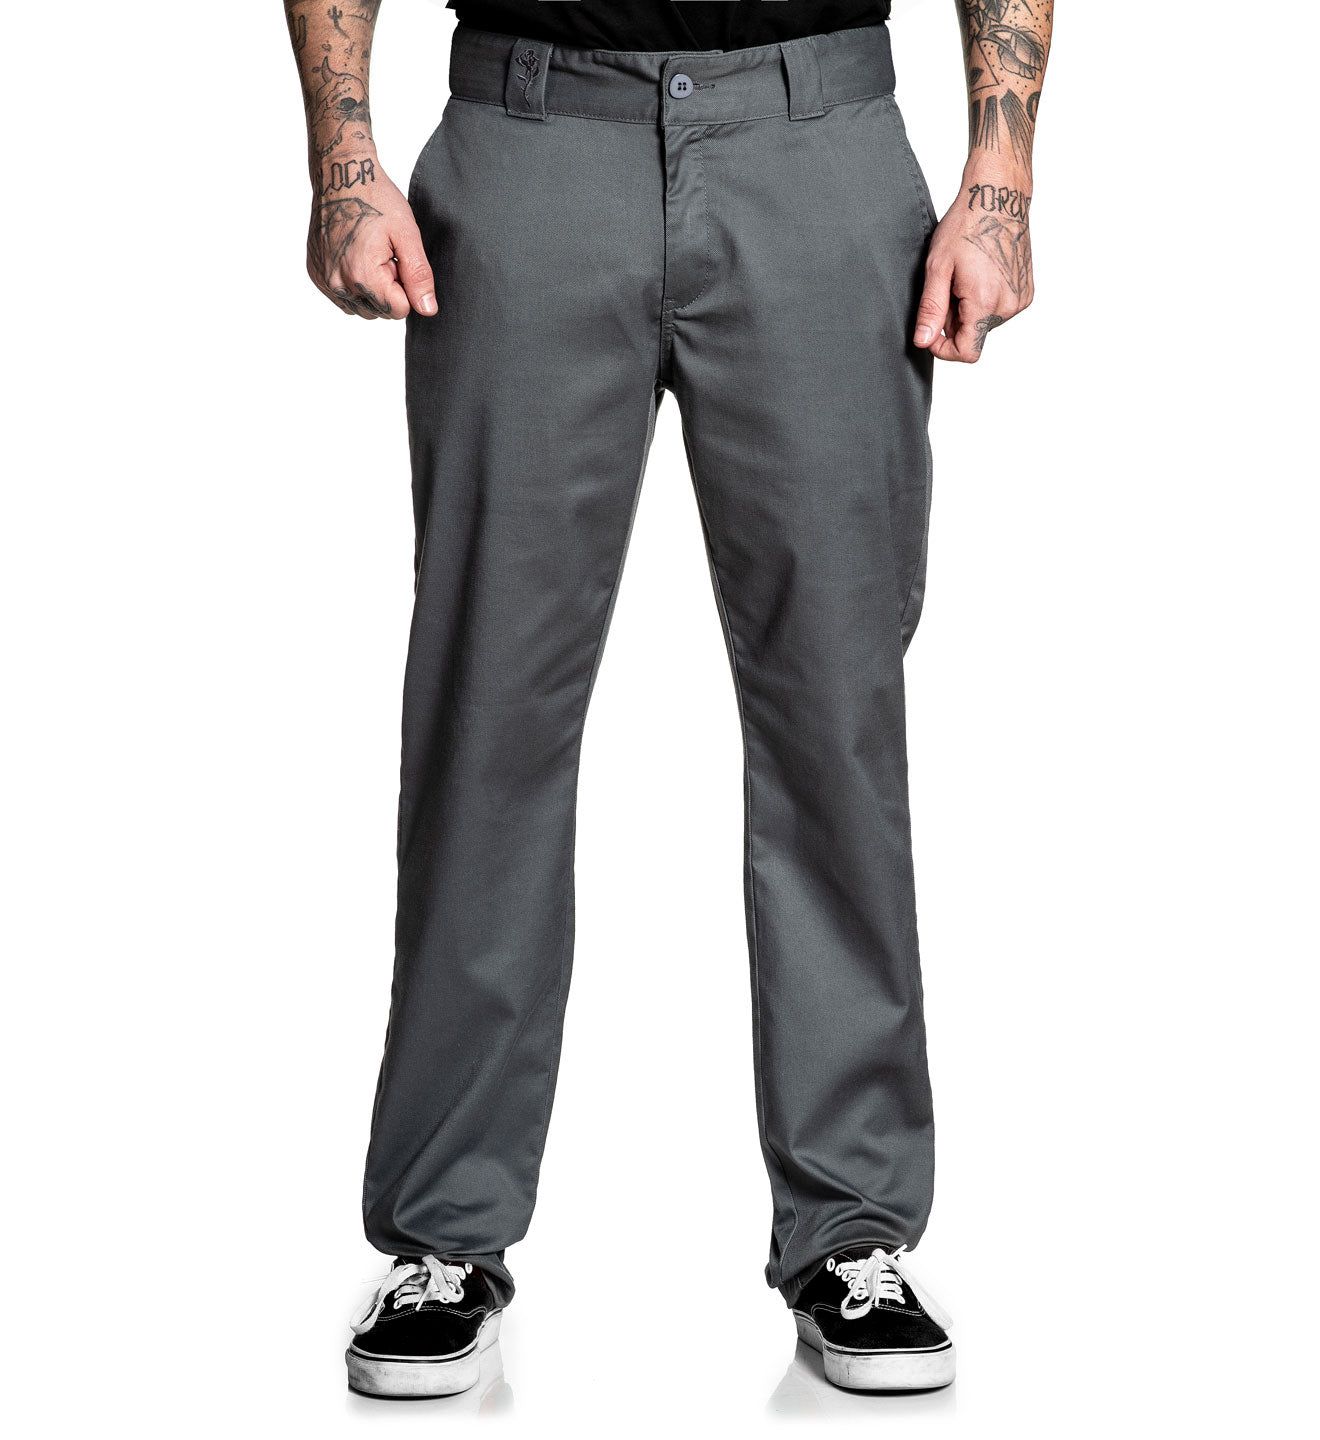 925 Chino Stretch Pant Grey -                                     